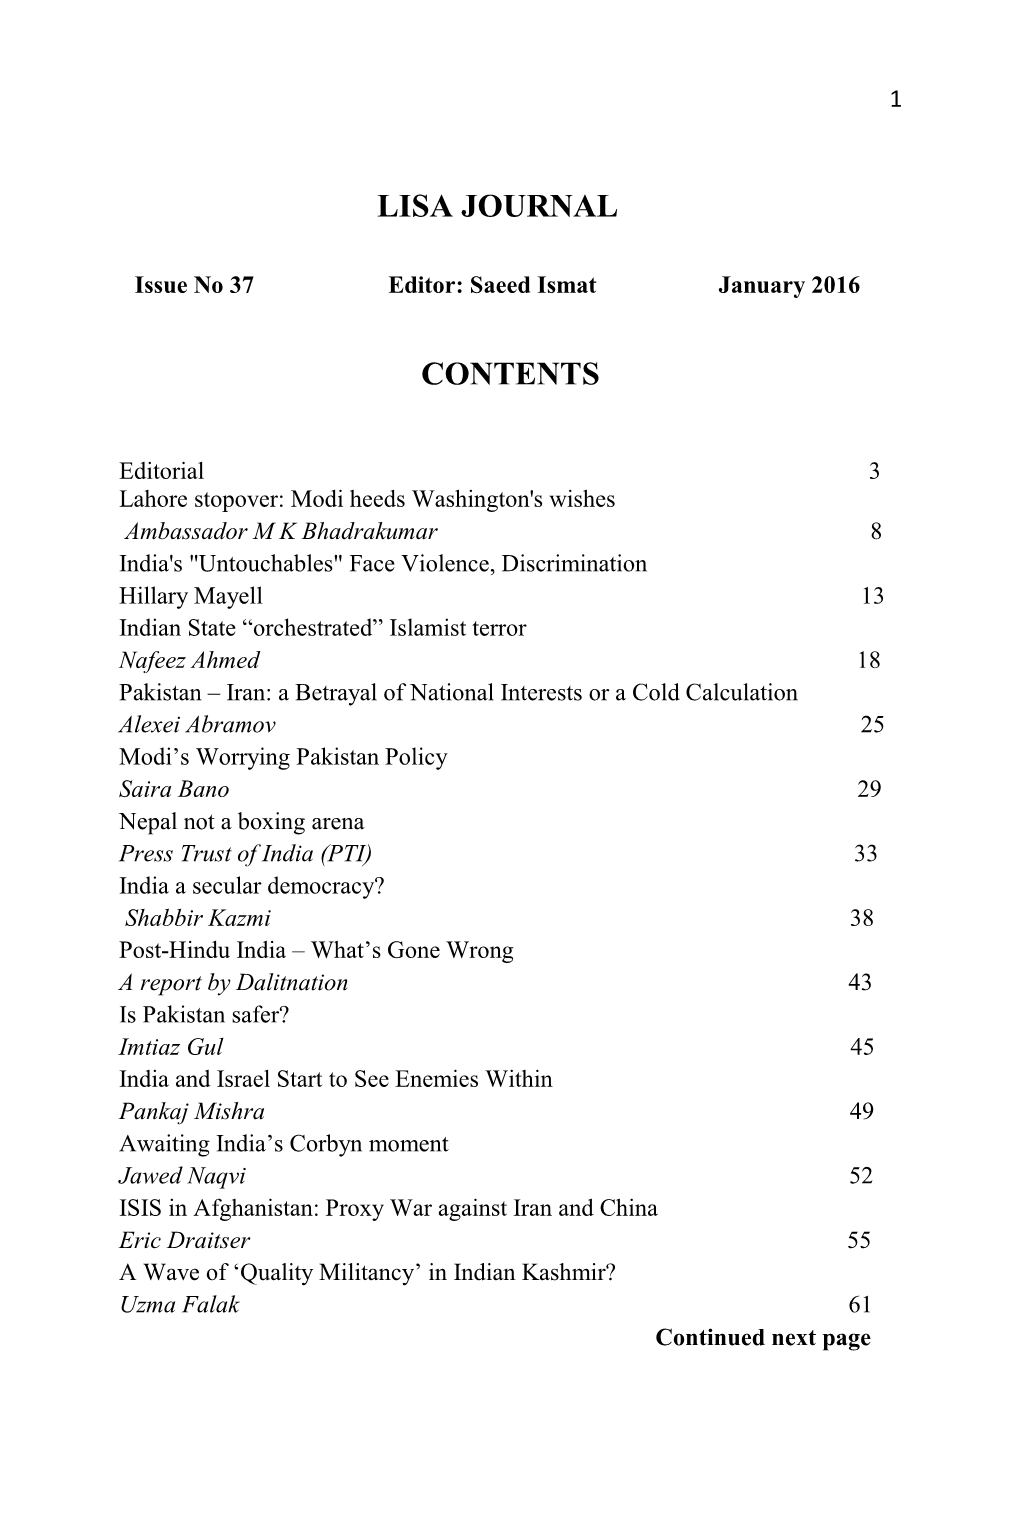 Lisa Journal Contents